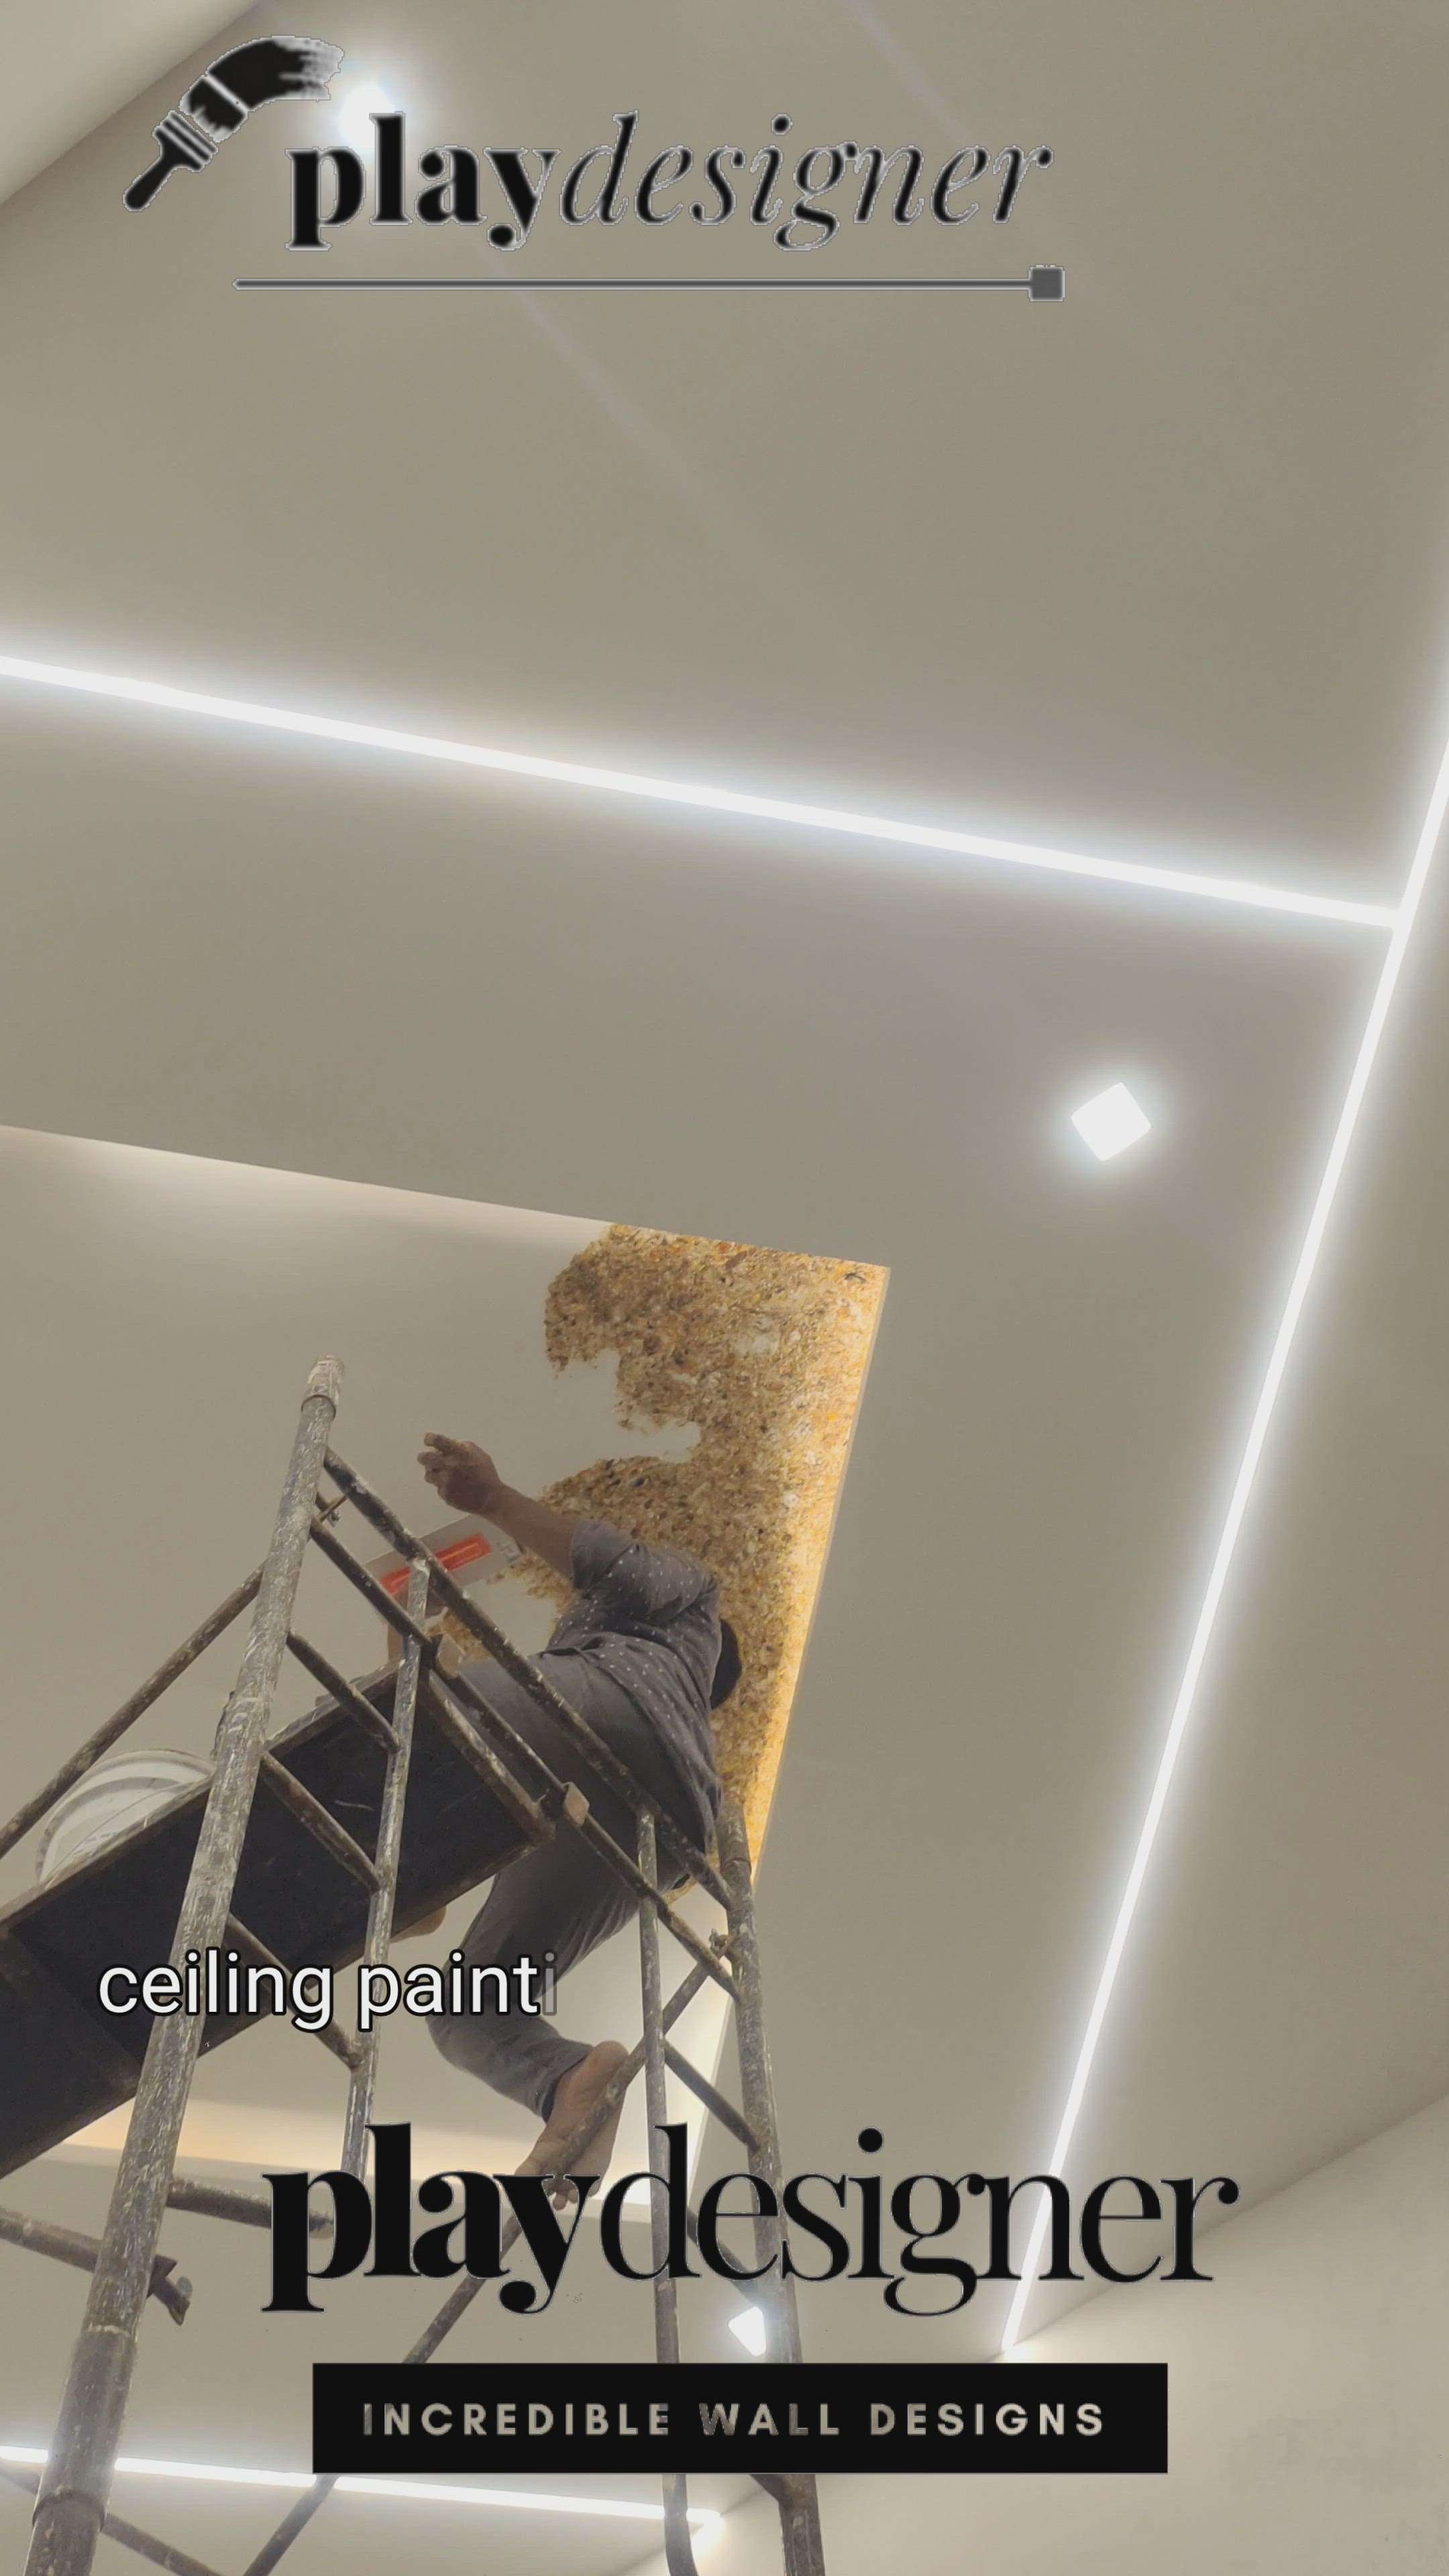 gypsum ceiling wall painting designe
#GypsumCeiling #WallPainting